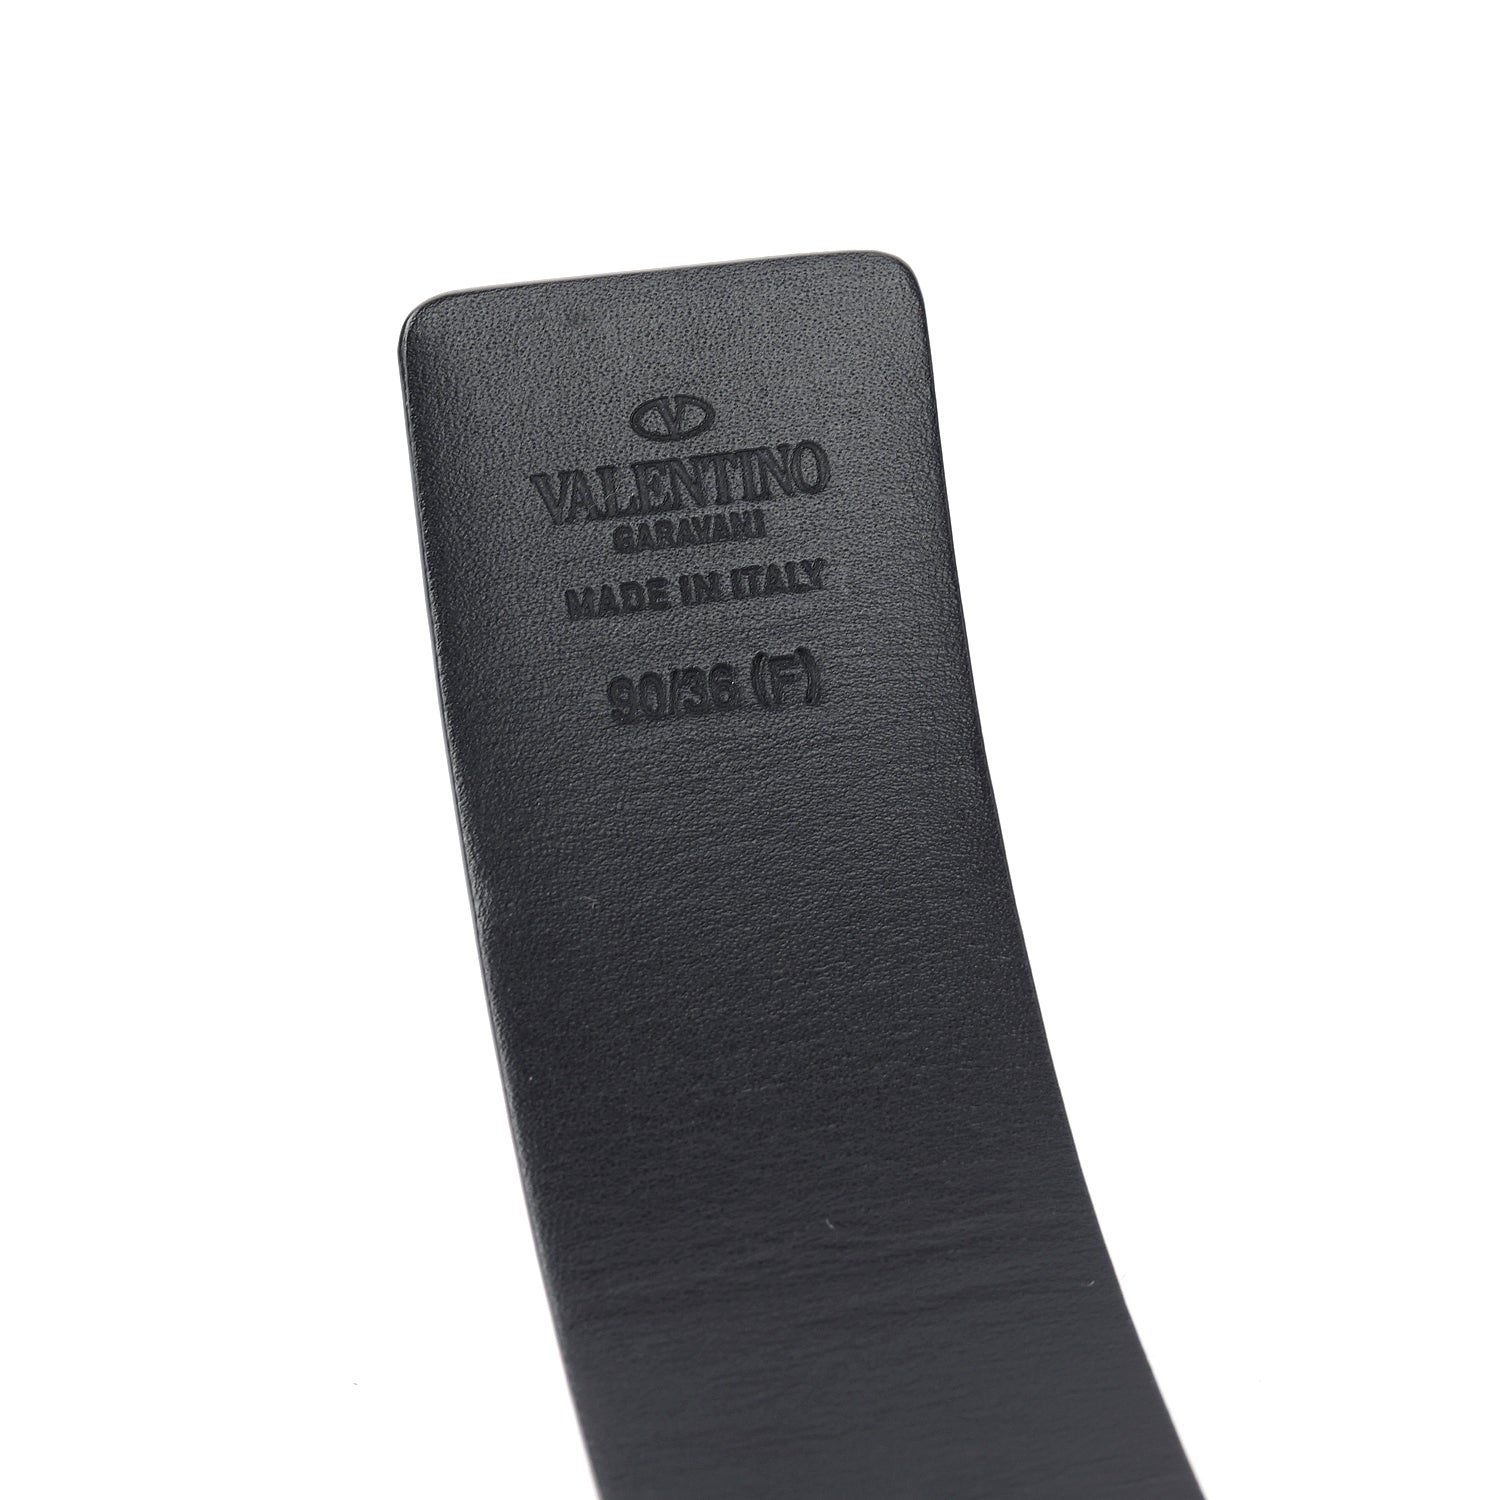 Leather VLogo Reversible Waist Belt